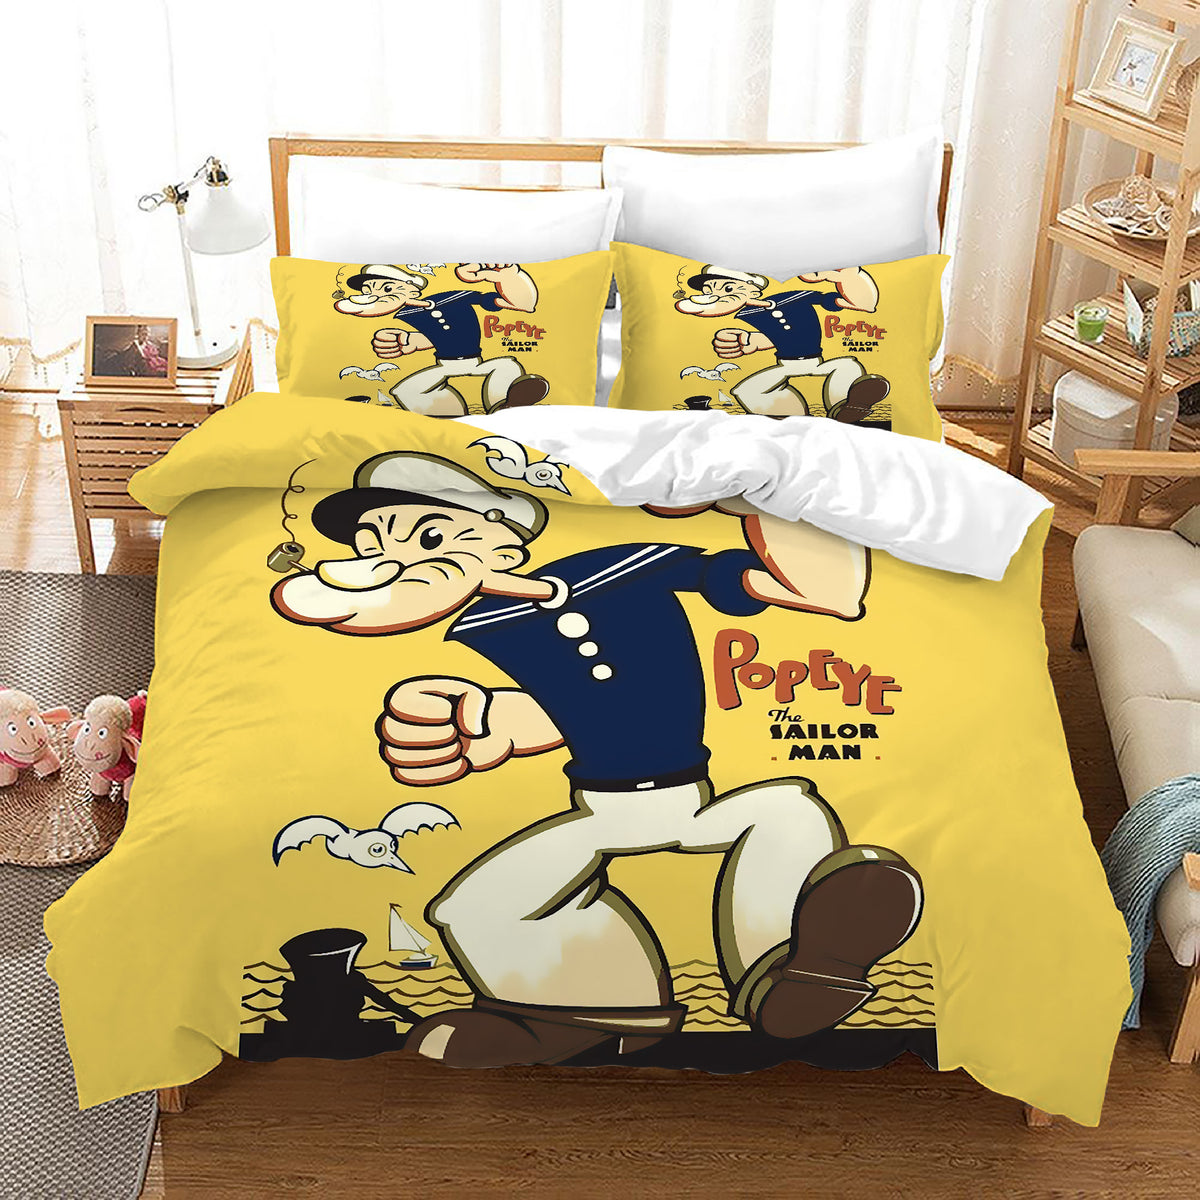 Popeye the Sailor #11 Duvet Cover Quilt Cover Pillowcase Bedding Set Bed Linen Home Bedroom Decor